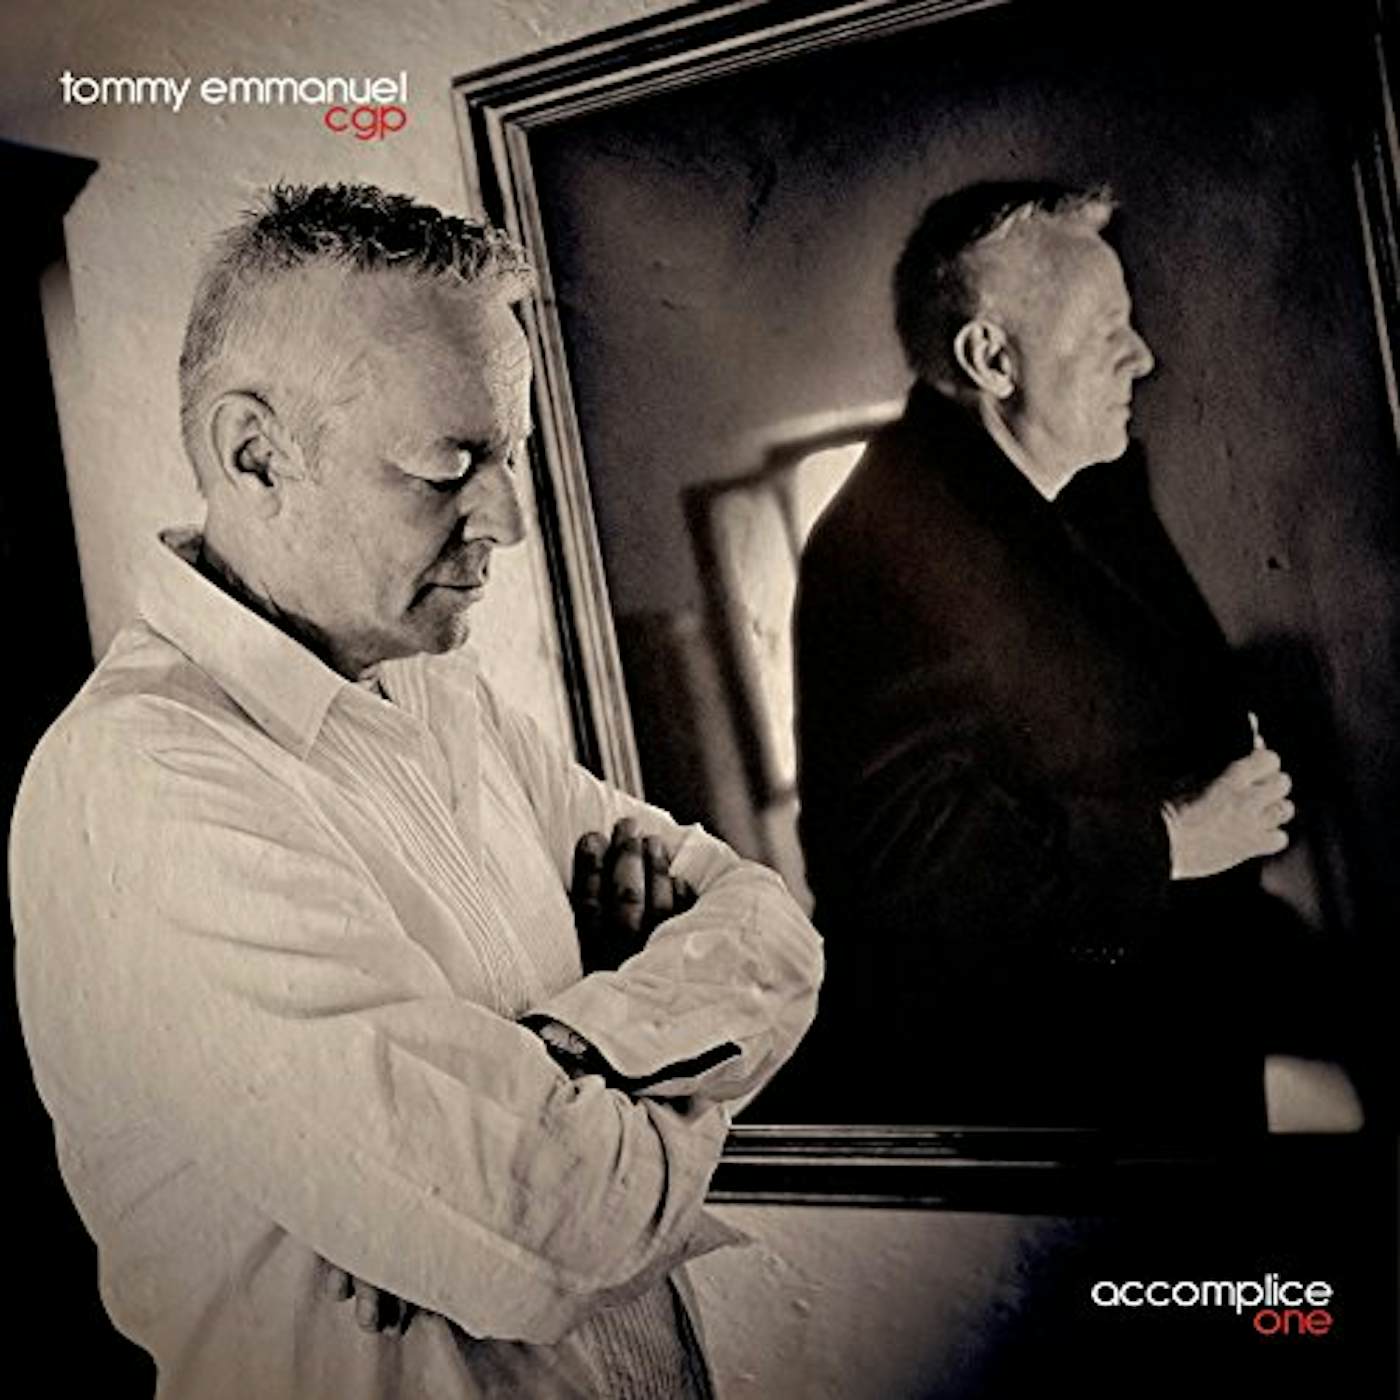 Tommy Emmanuel ACCOMPLICE ONE CD